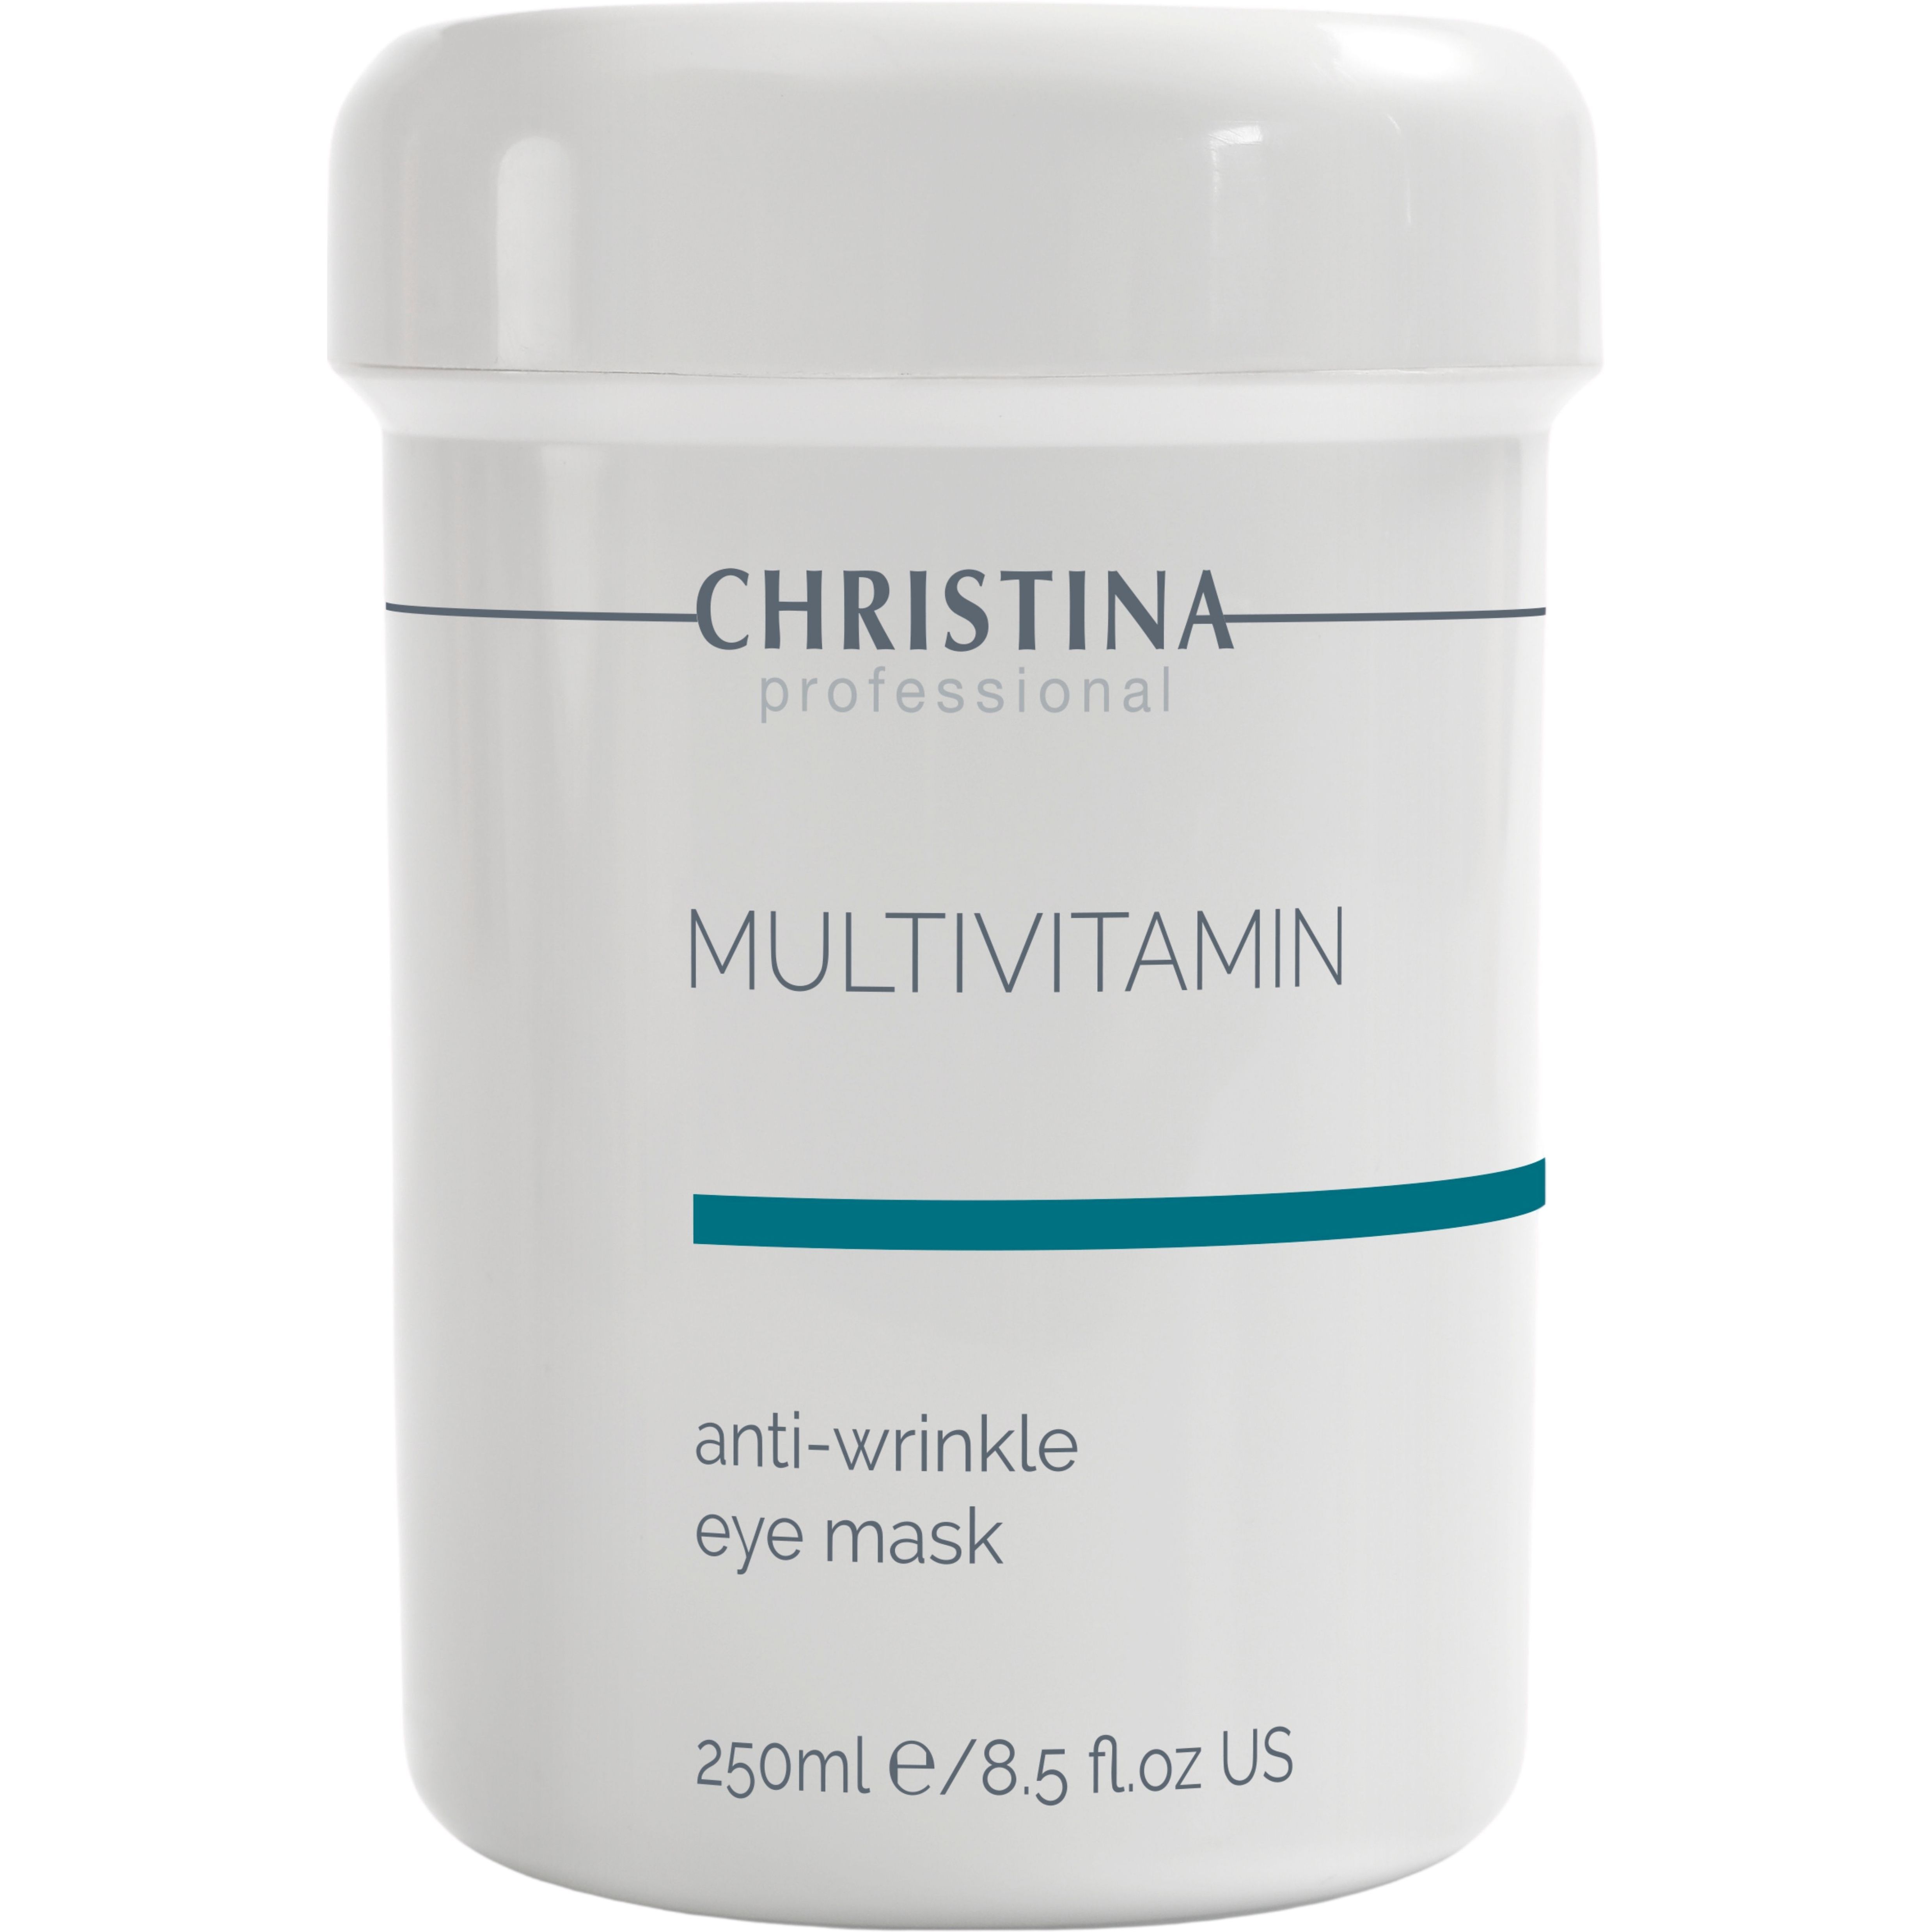 Мультивітамінна маска проти зморщок Christina Multivitamin Anti-Wrinkle Eye Mask для зони навколо очей 250 мл - фото 2